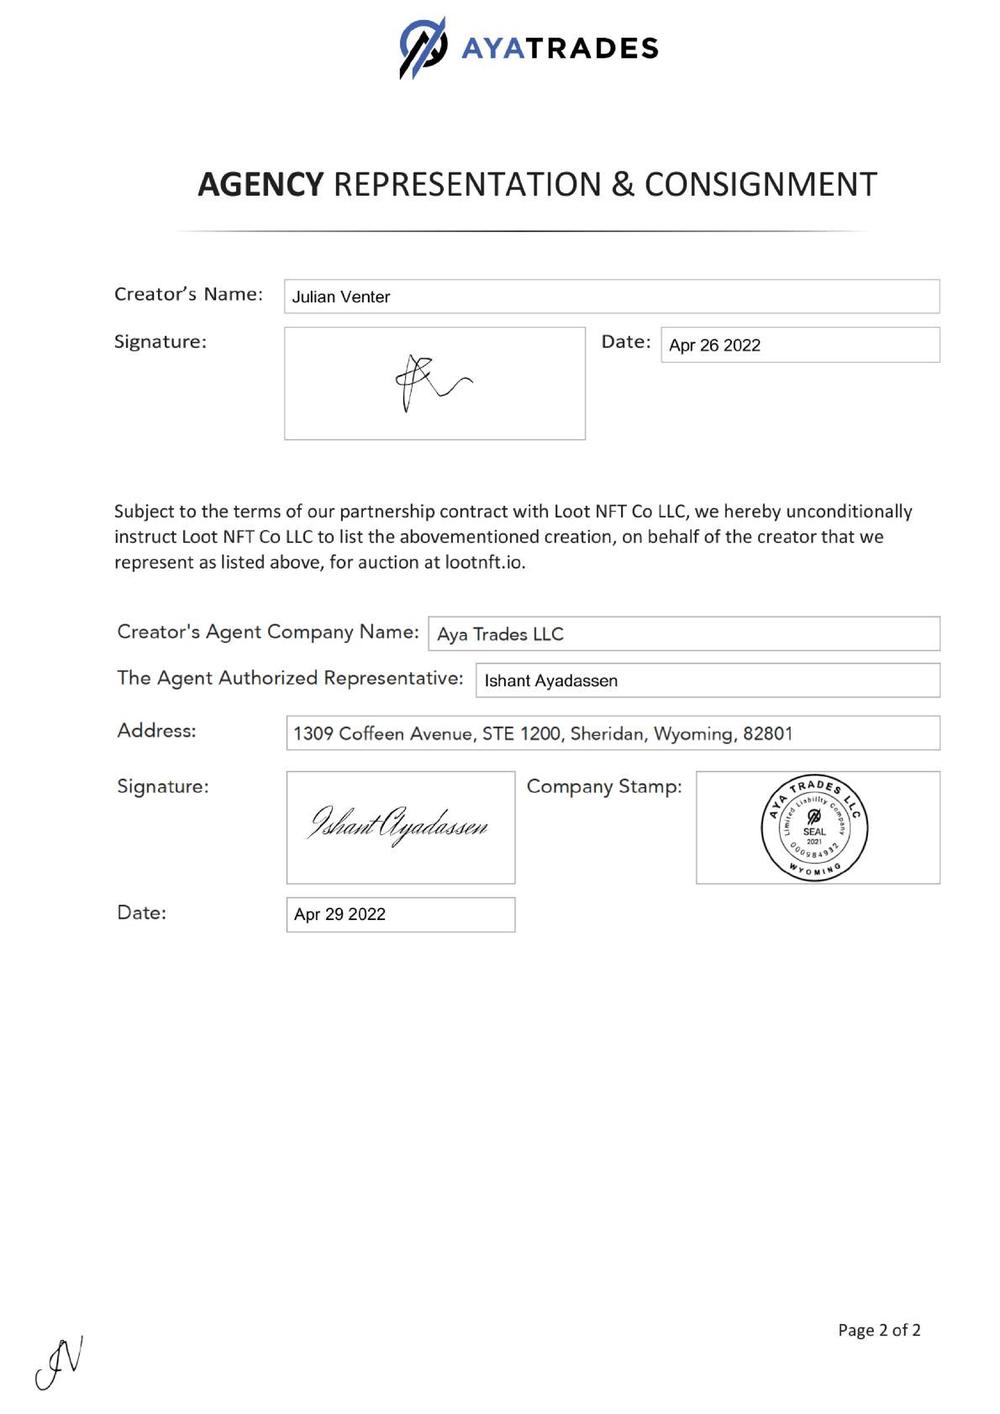 Certificate of Authenticity and Consignment - Vuurwandelaar